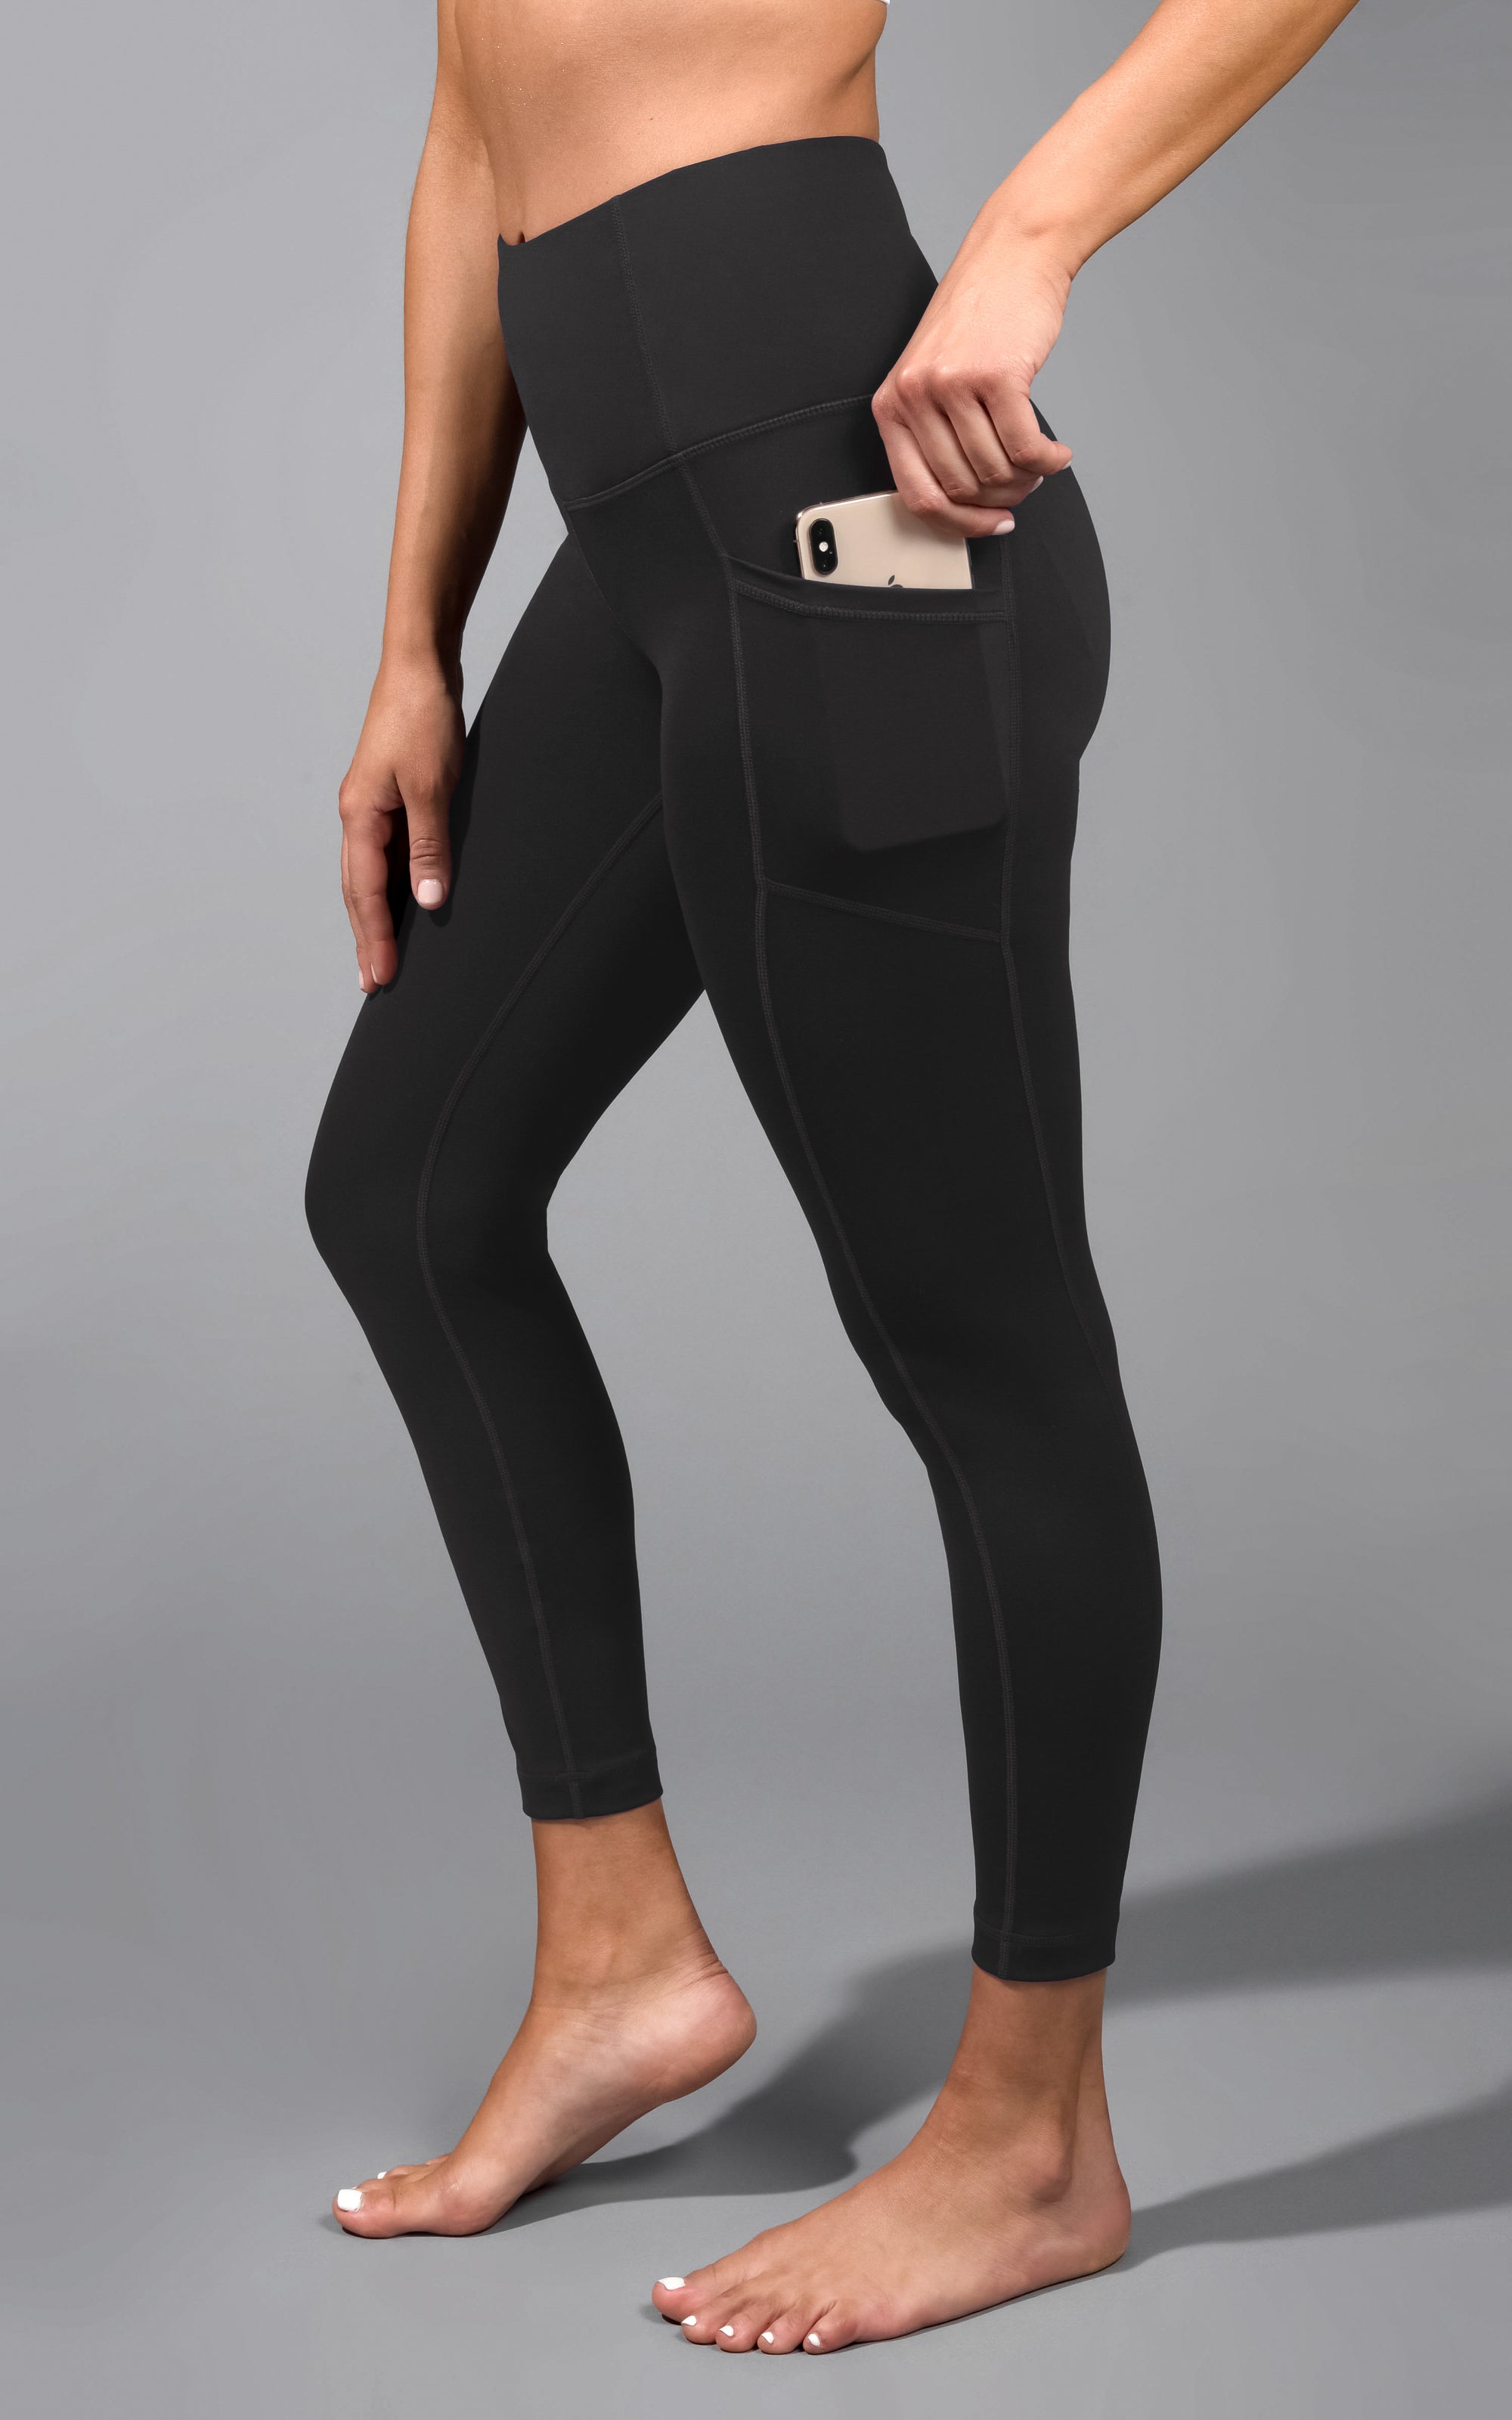 Yogalicious Lux High Waisted Pocket Legging Black Size XS - $12